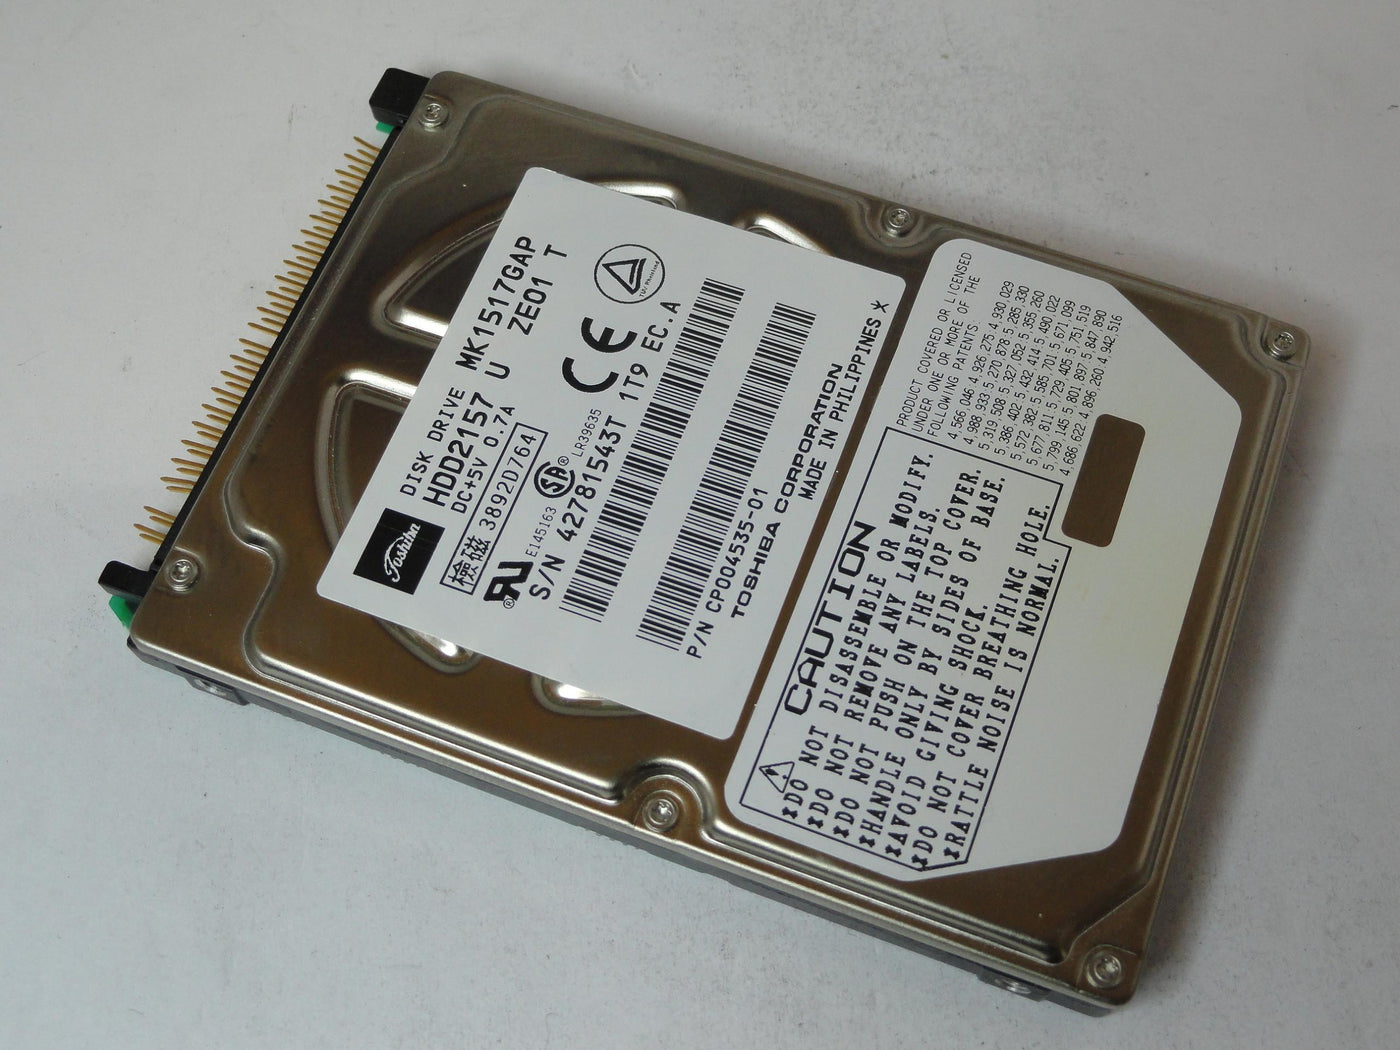 PR21449_HDD2157_Toshiba 15.1Gb IDE 4200rpm 2.5in HDD - Image2